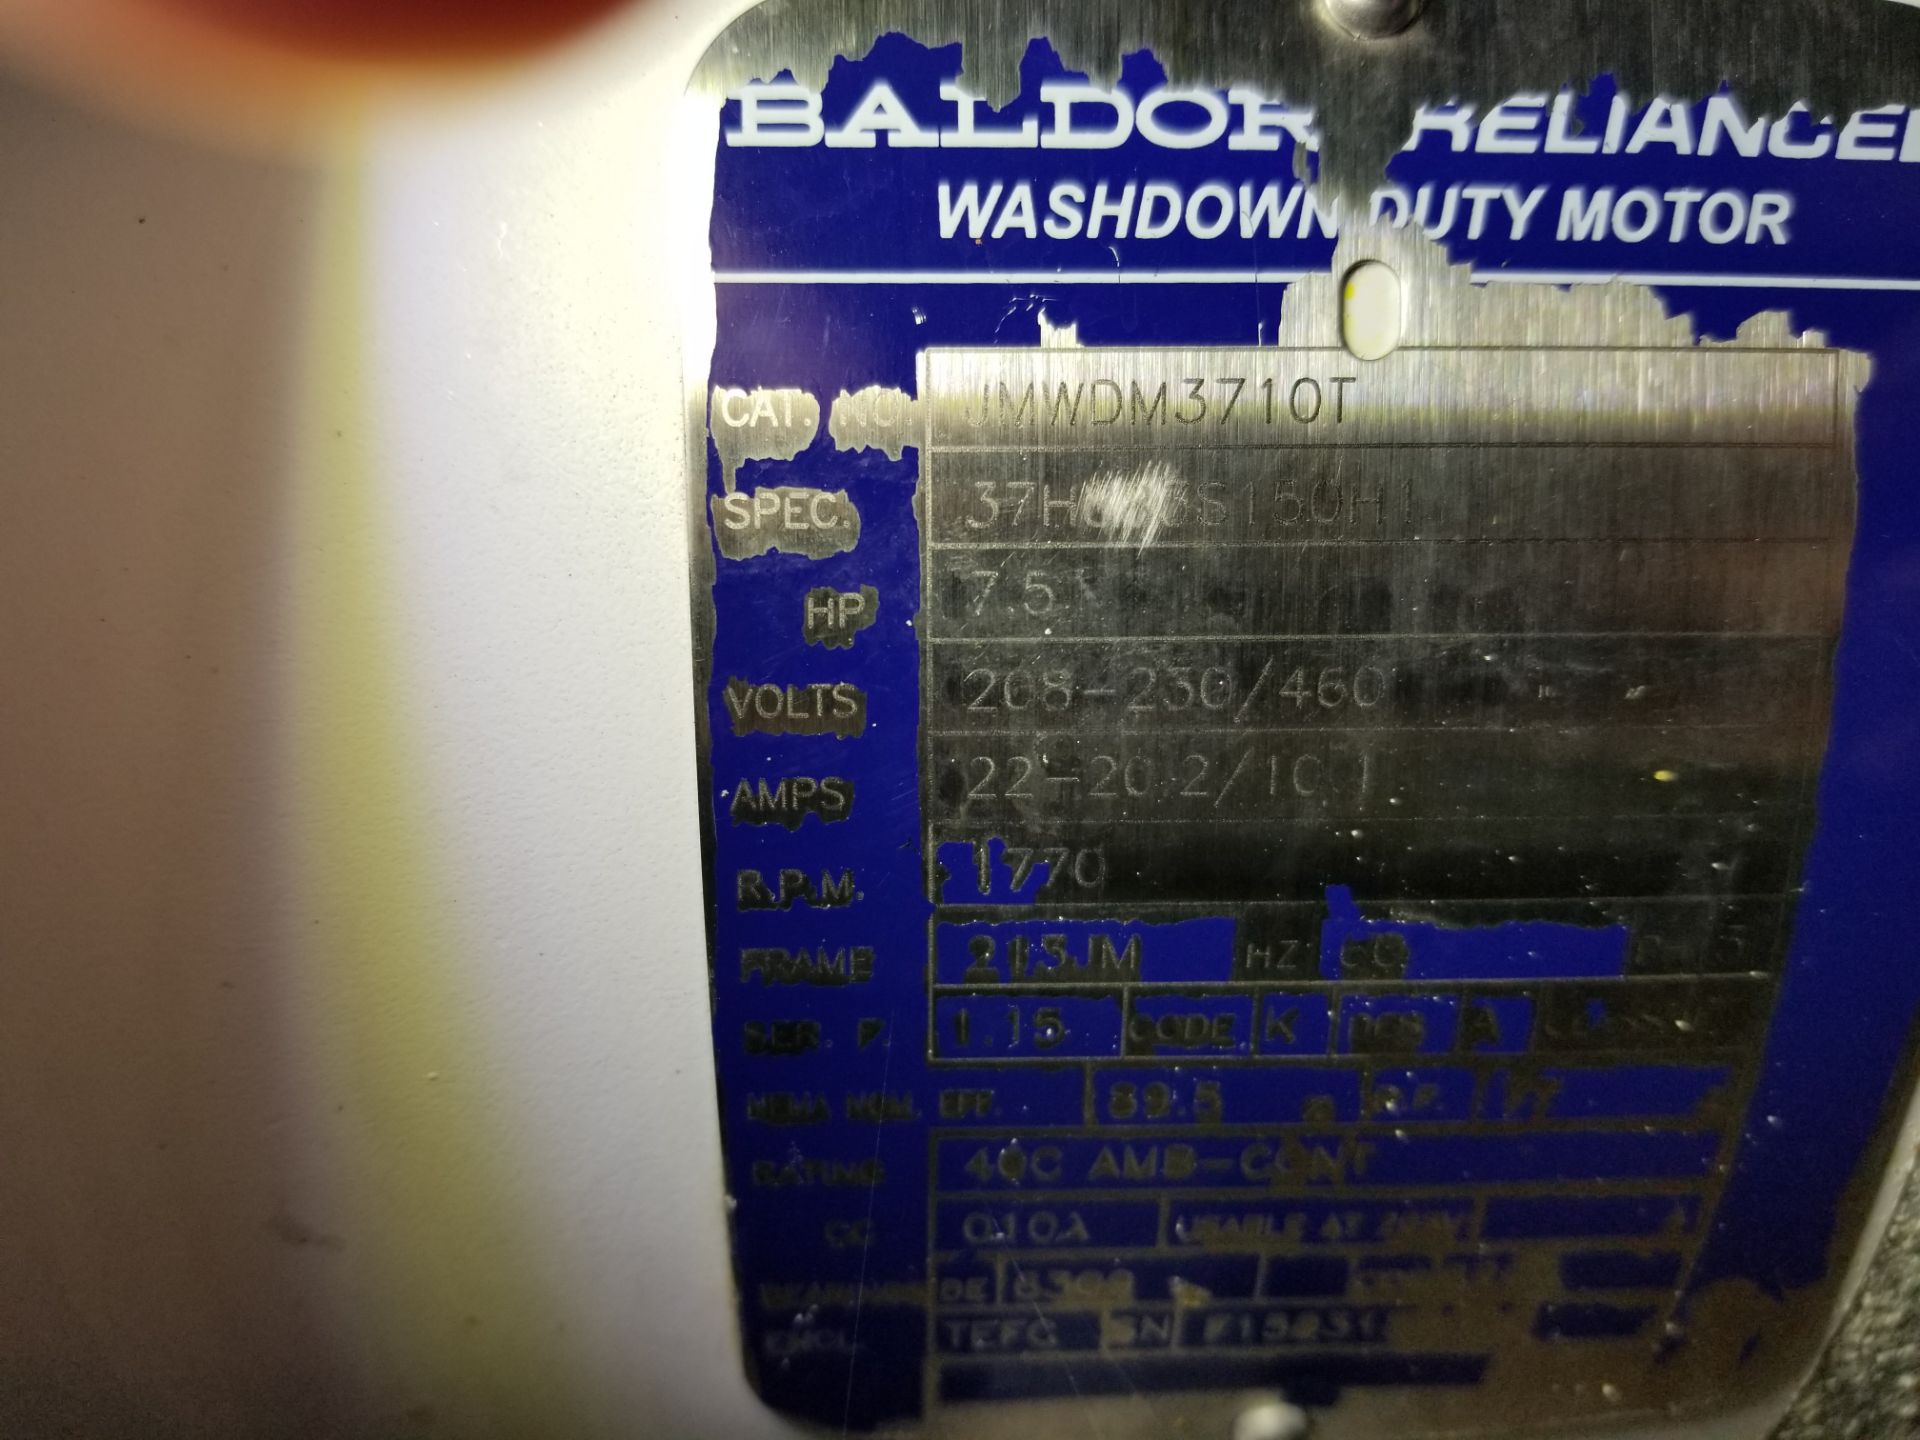 Waukesha Centrifugal Pump - Baldor 7.5HP Washdown Duty Motor - Image 2 of 2